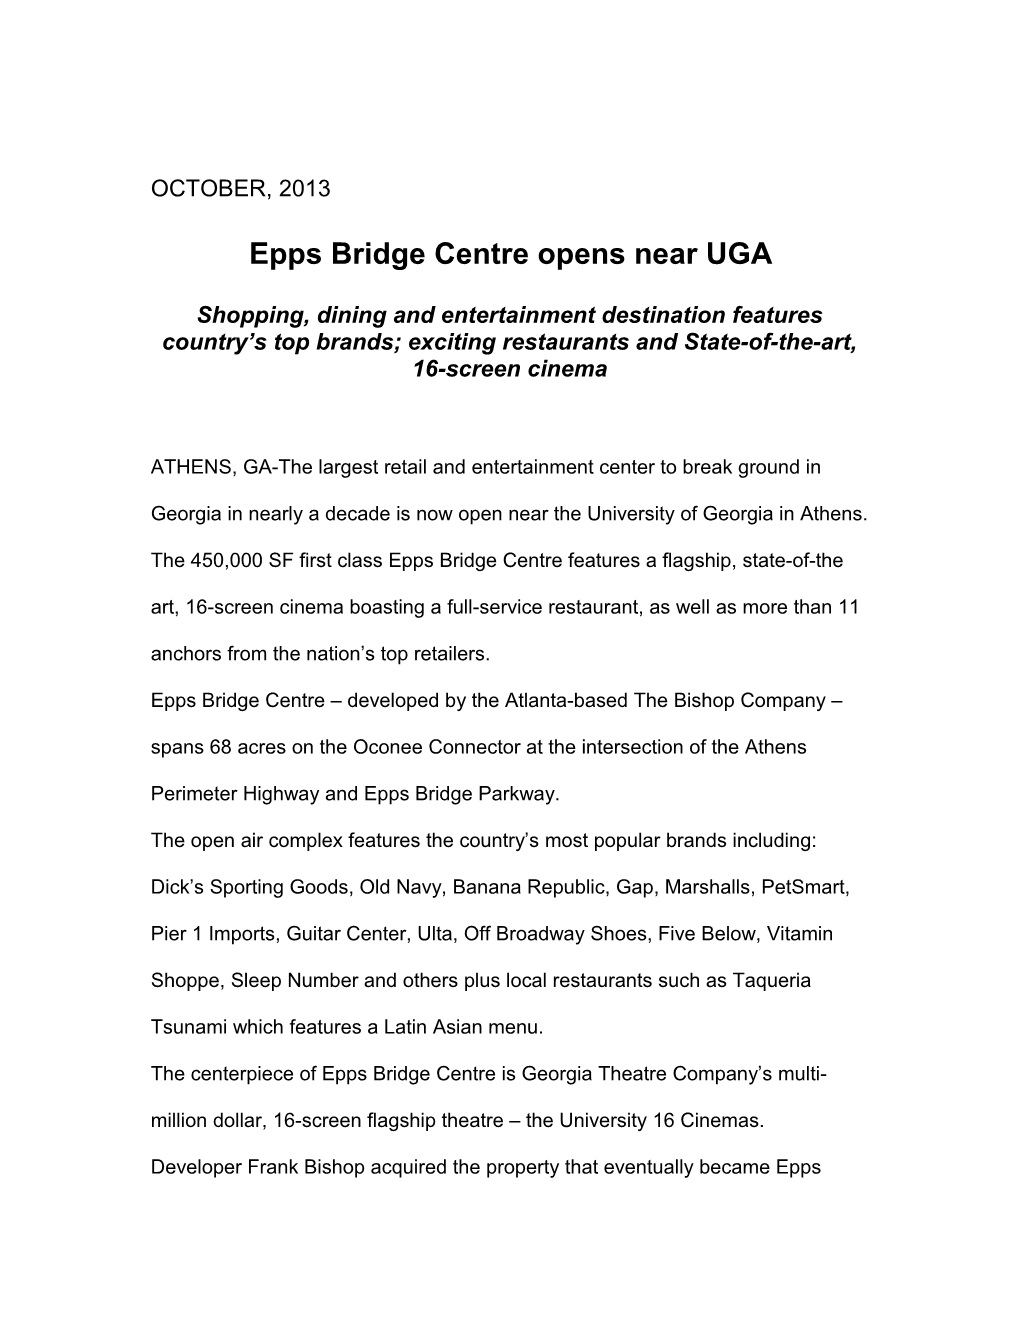 Epps Bridge Centre Opens Near UGA